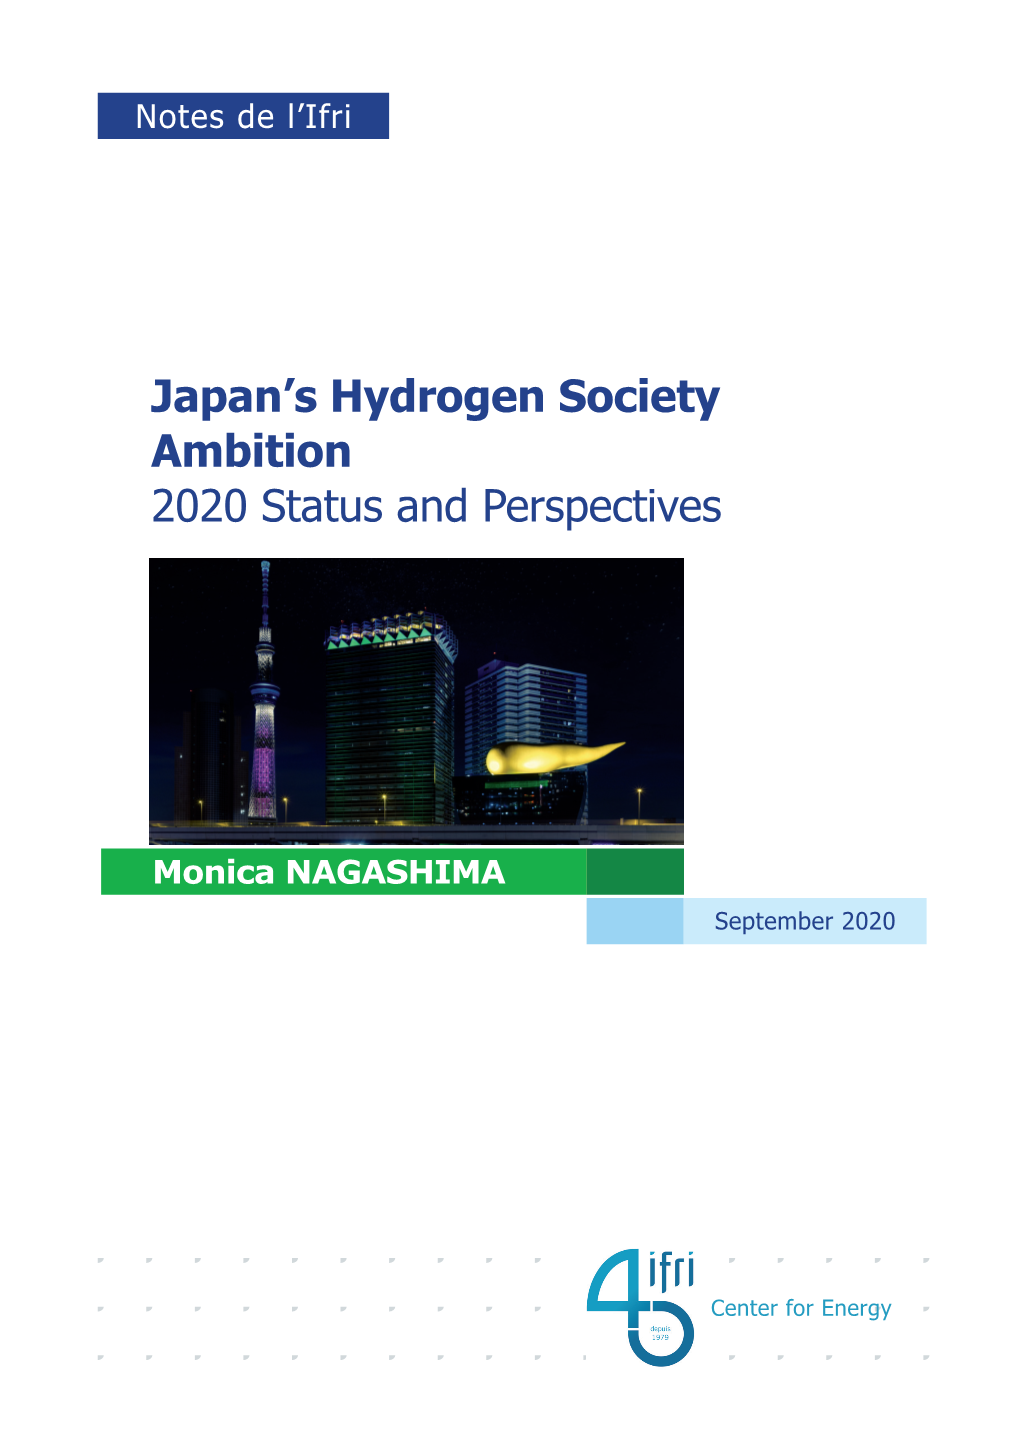 Japan's Hydrogen Society Ambition